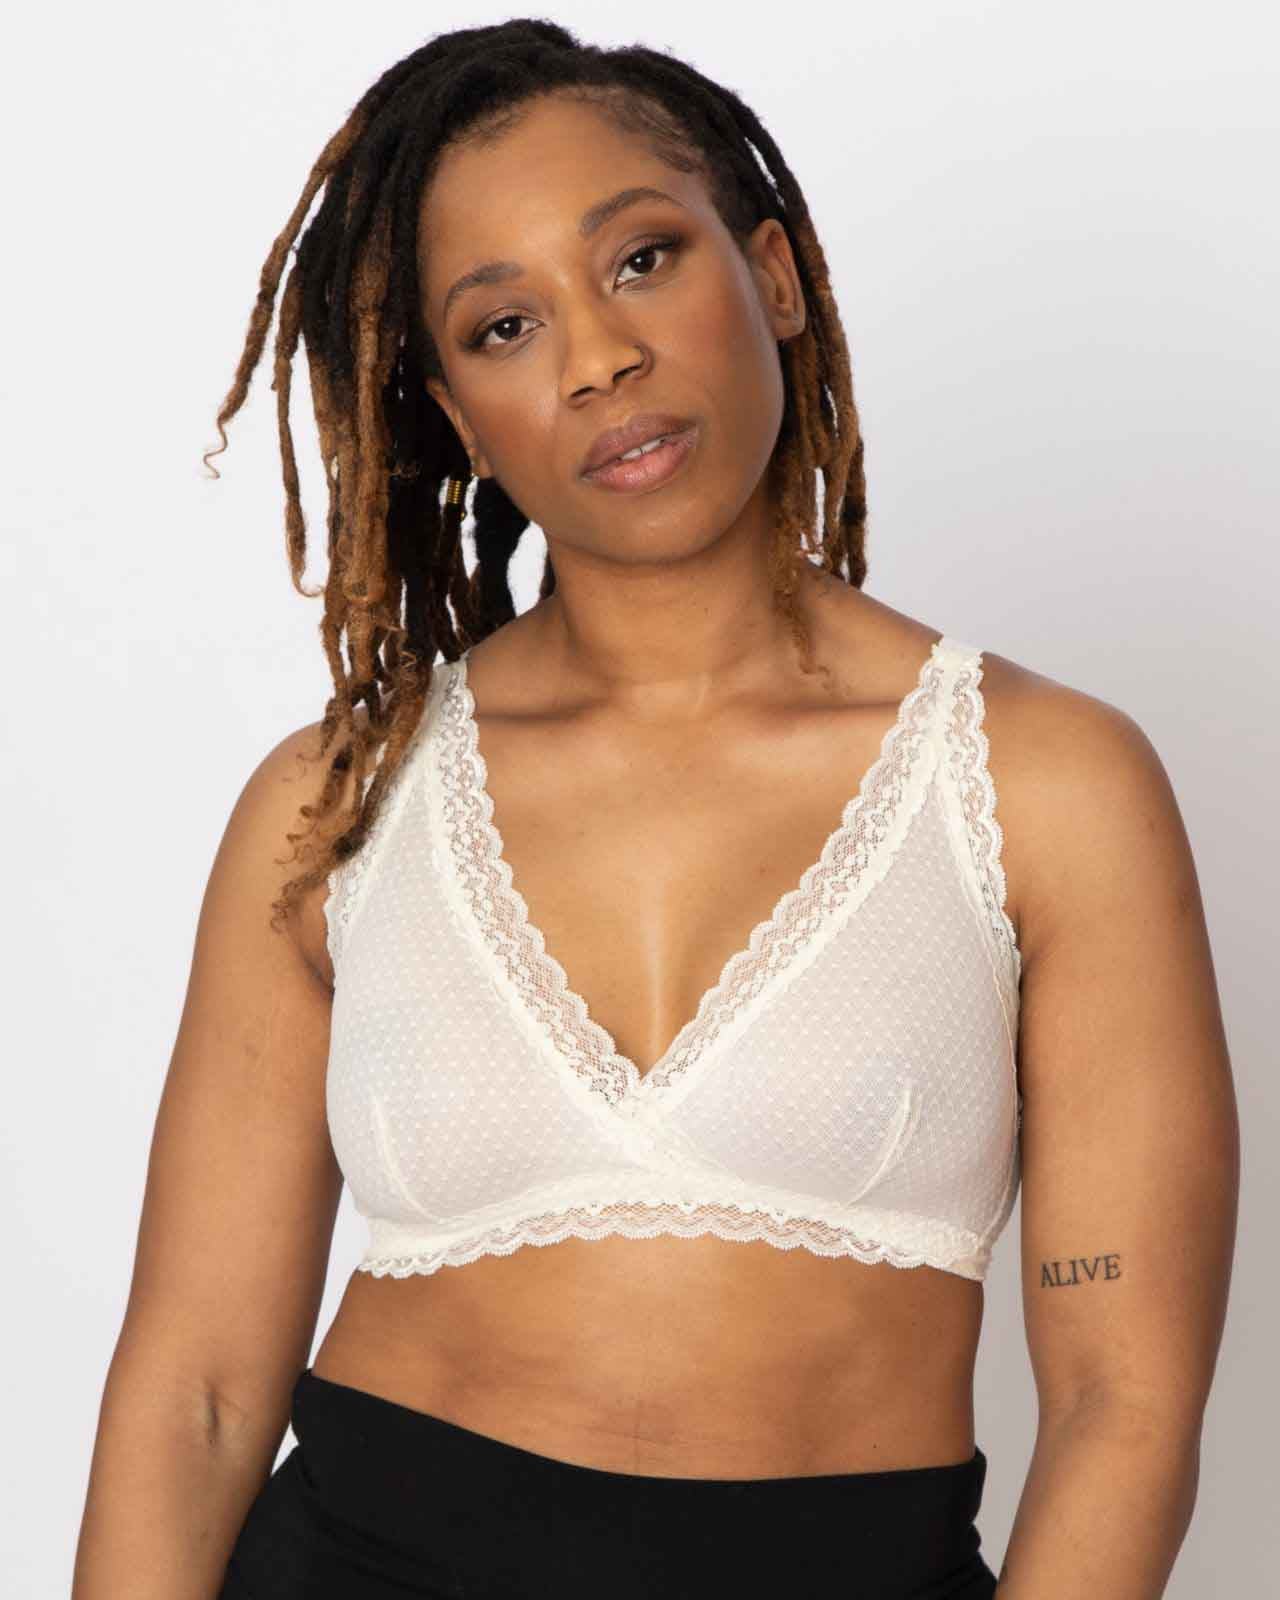 Susan Z. on LinkedIn: woman bralette lace plus size bra tops bras